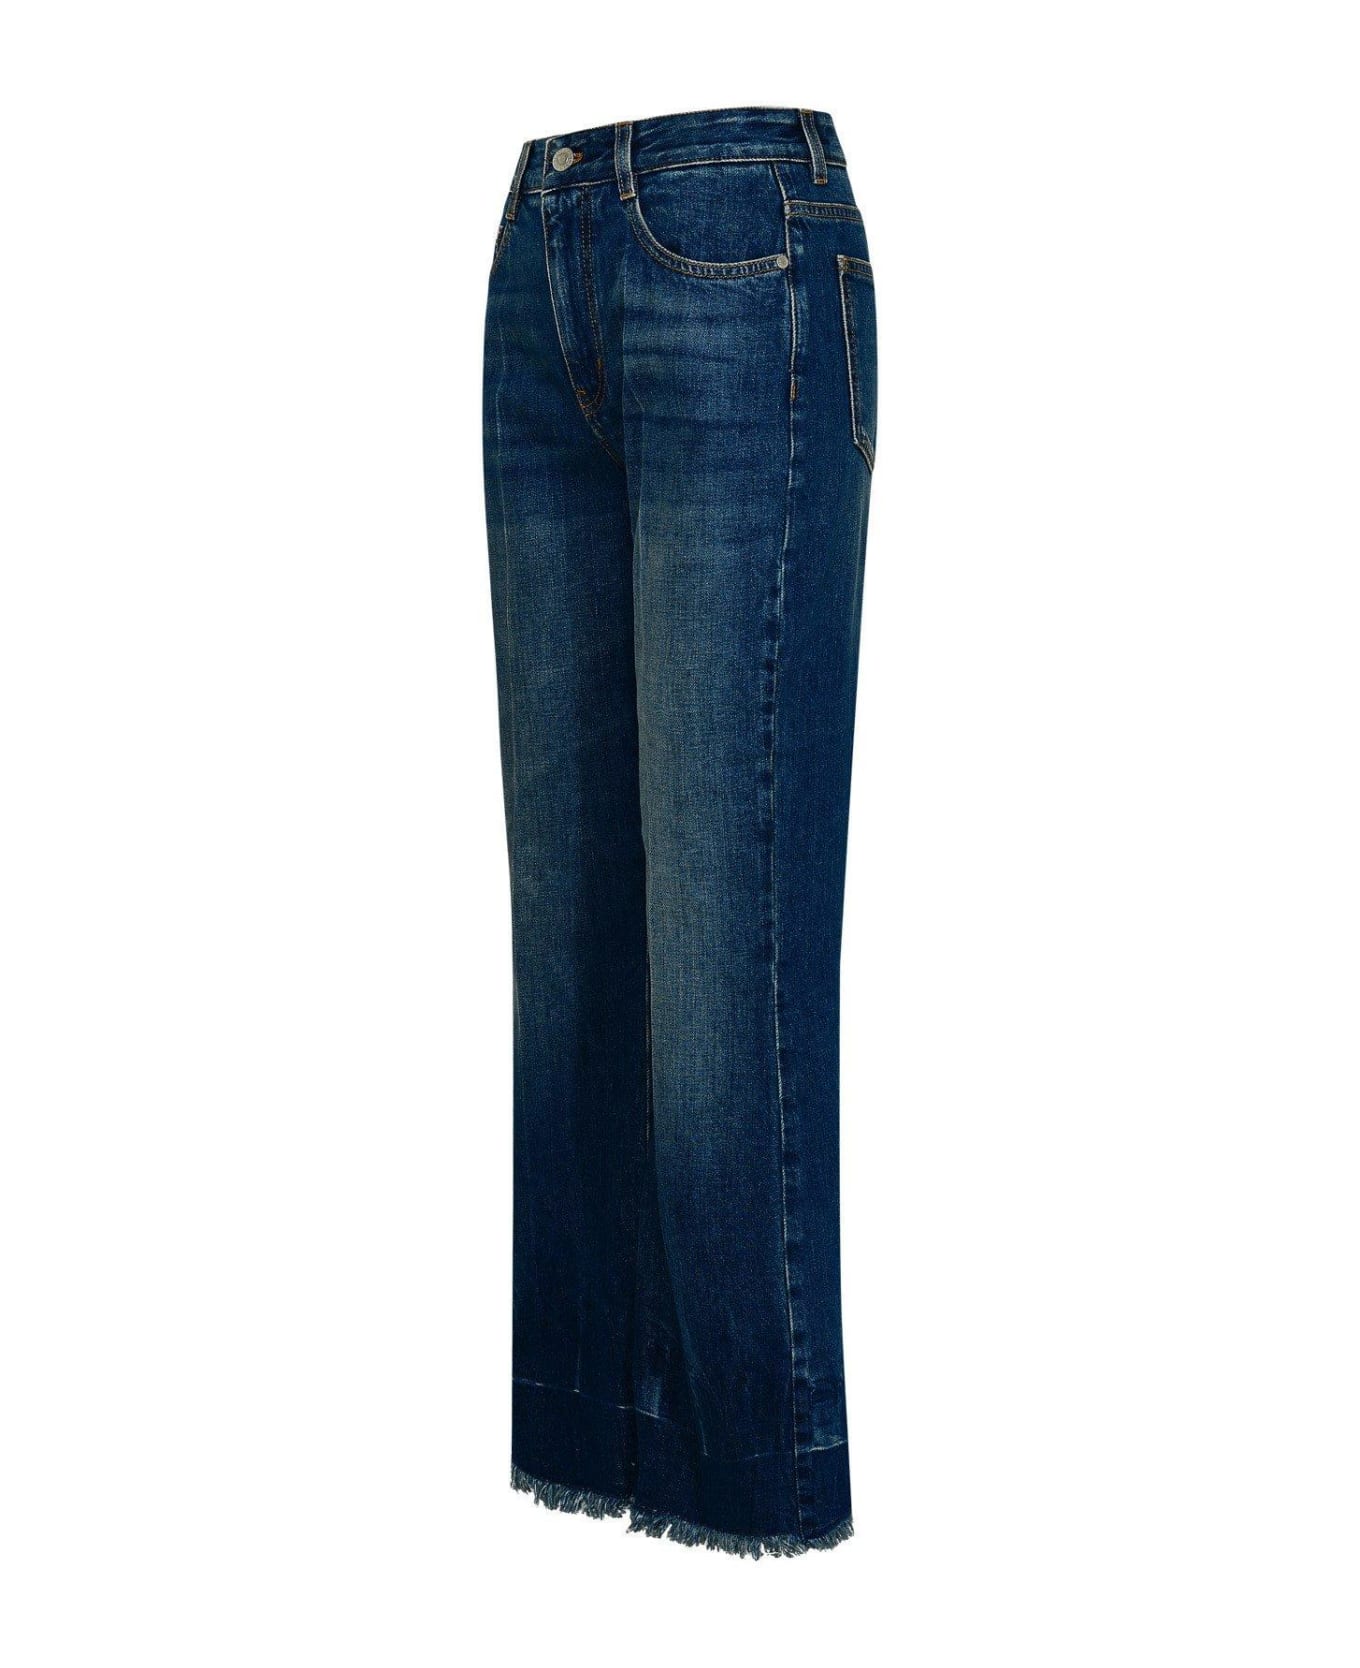 Stella McCartney Cropped Flared Jeans - Blue デニム